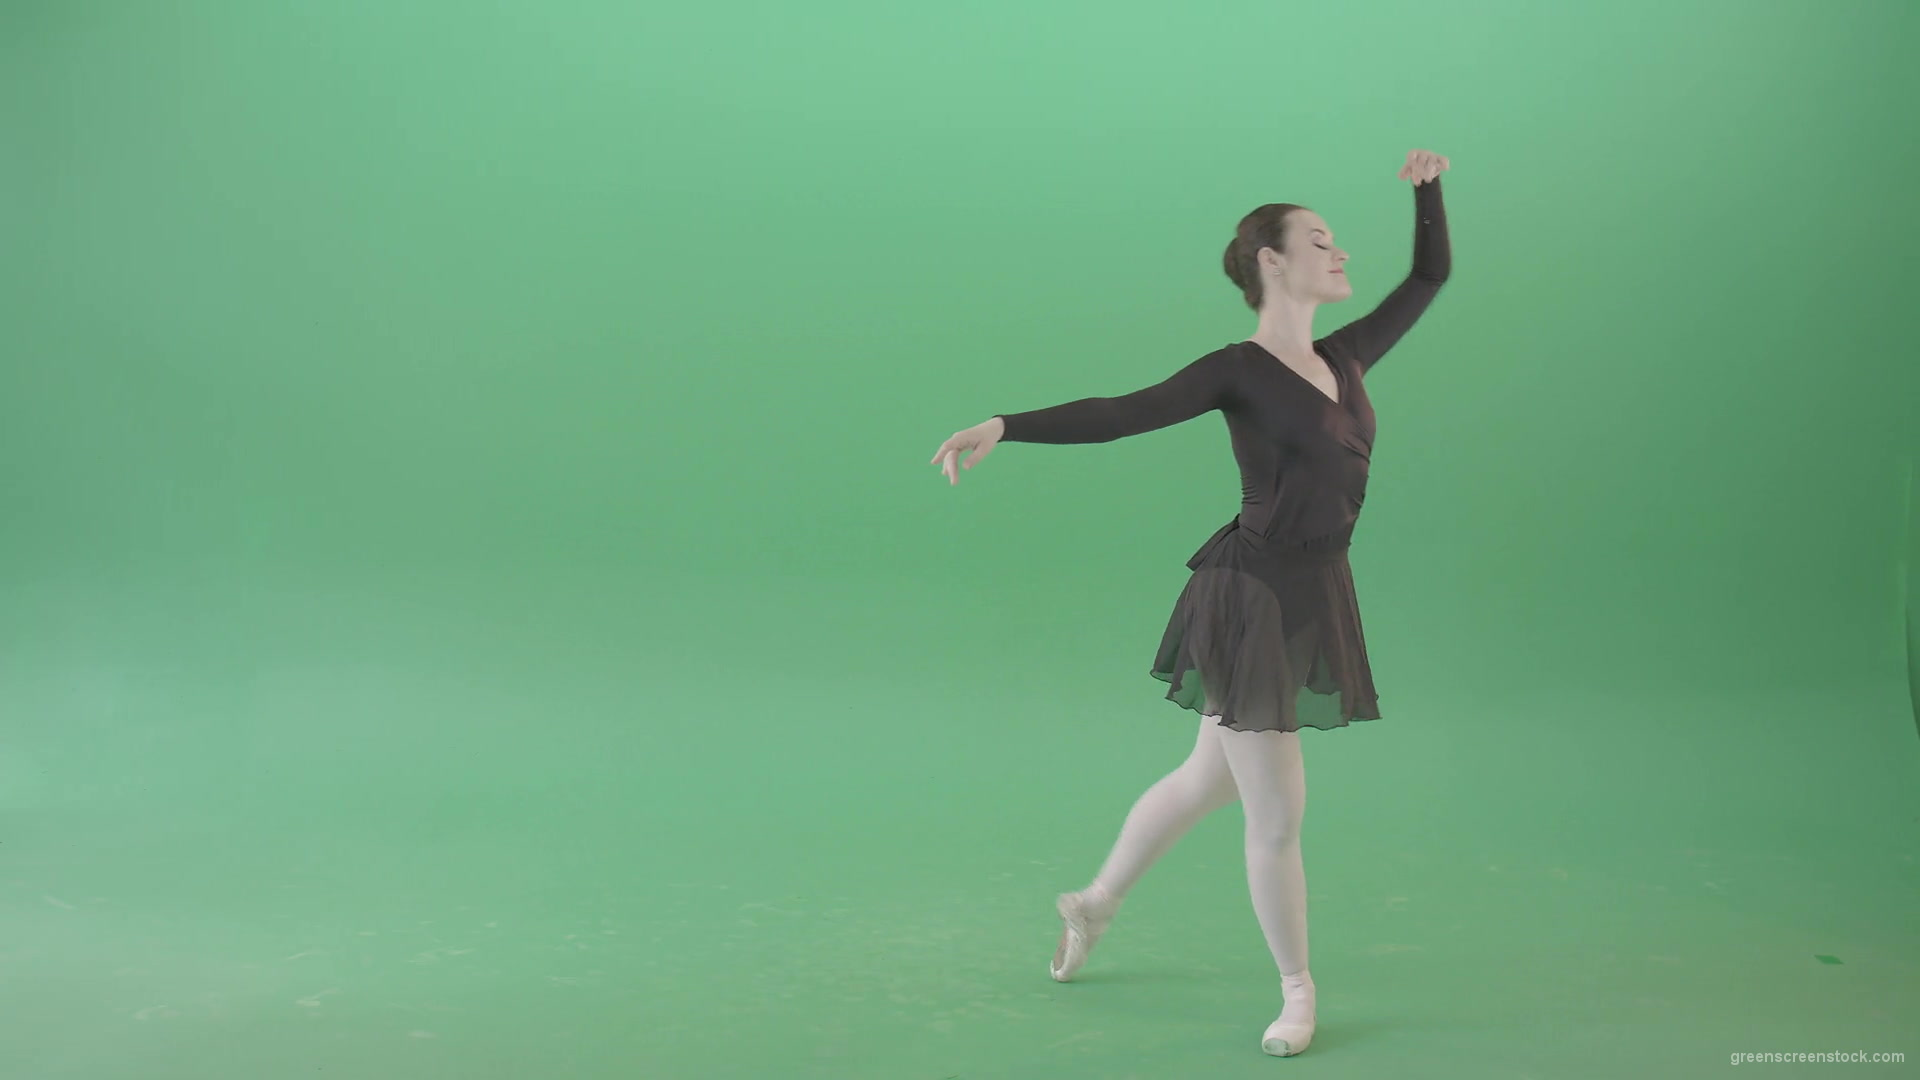 Green Screen Footage Dance